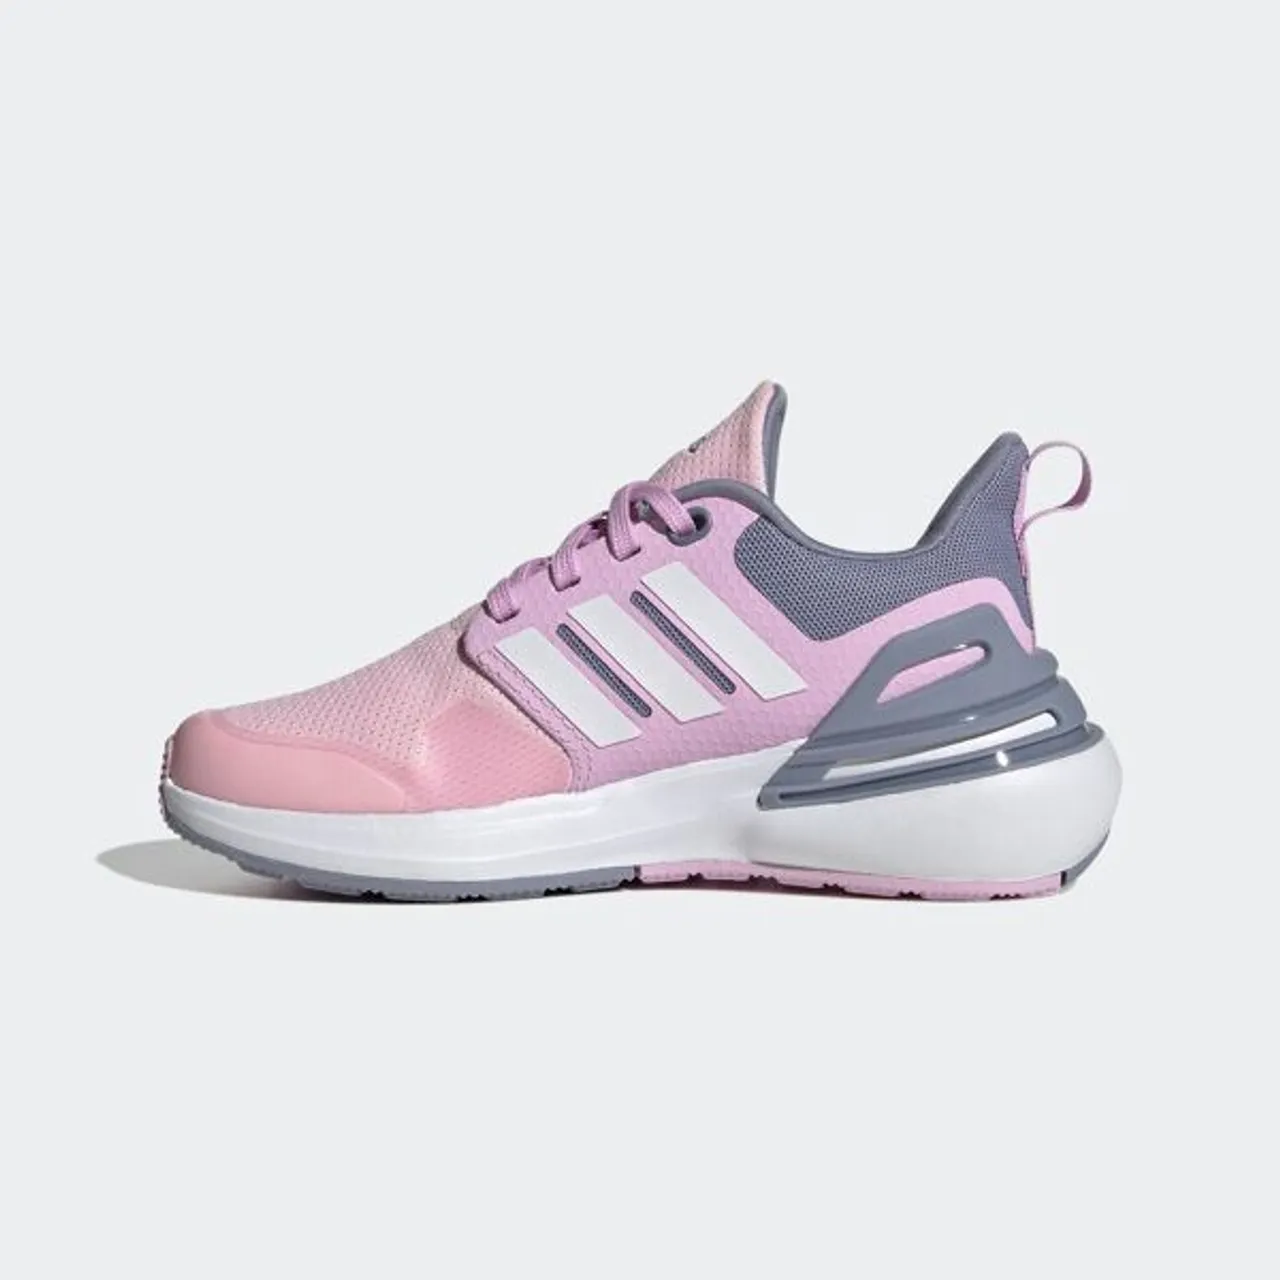 Sneaker ADIDAS SPORTSWEAR "RAPIDASPORT BOUNCE LACE" Gr. 34, pink (clear pink, cloud white, bliss lilac) Schuhe Laufschuhe